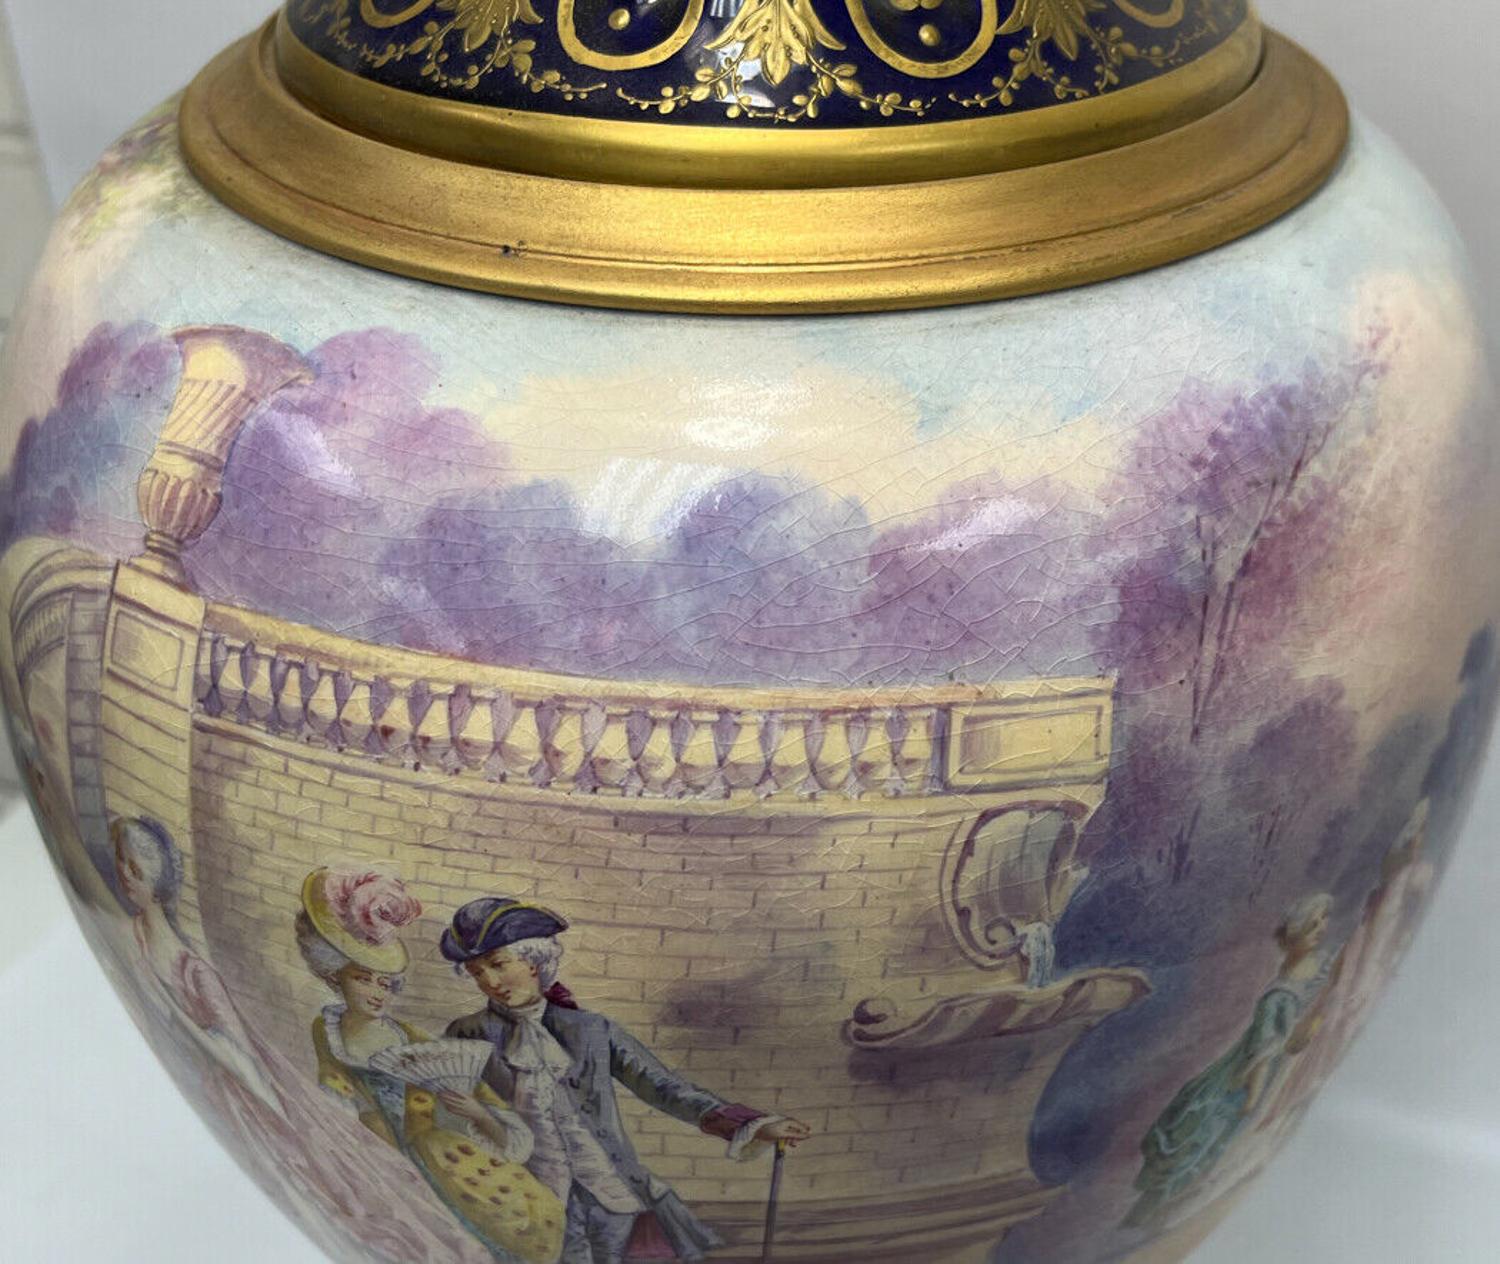  Sevres France Porcelain Large Decorative Urn, Late 19th Century  For Sale 1